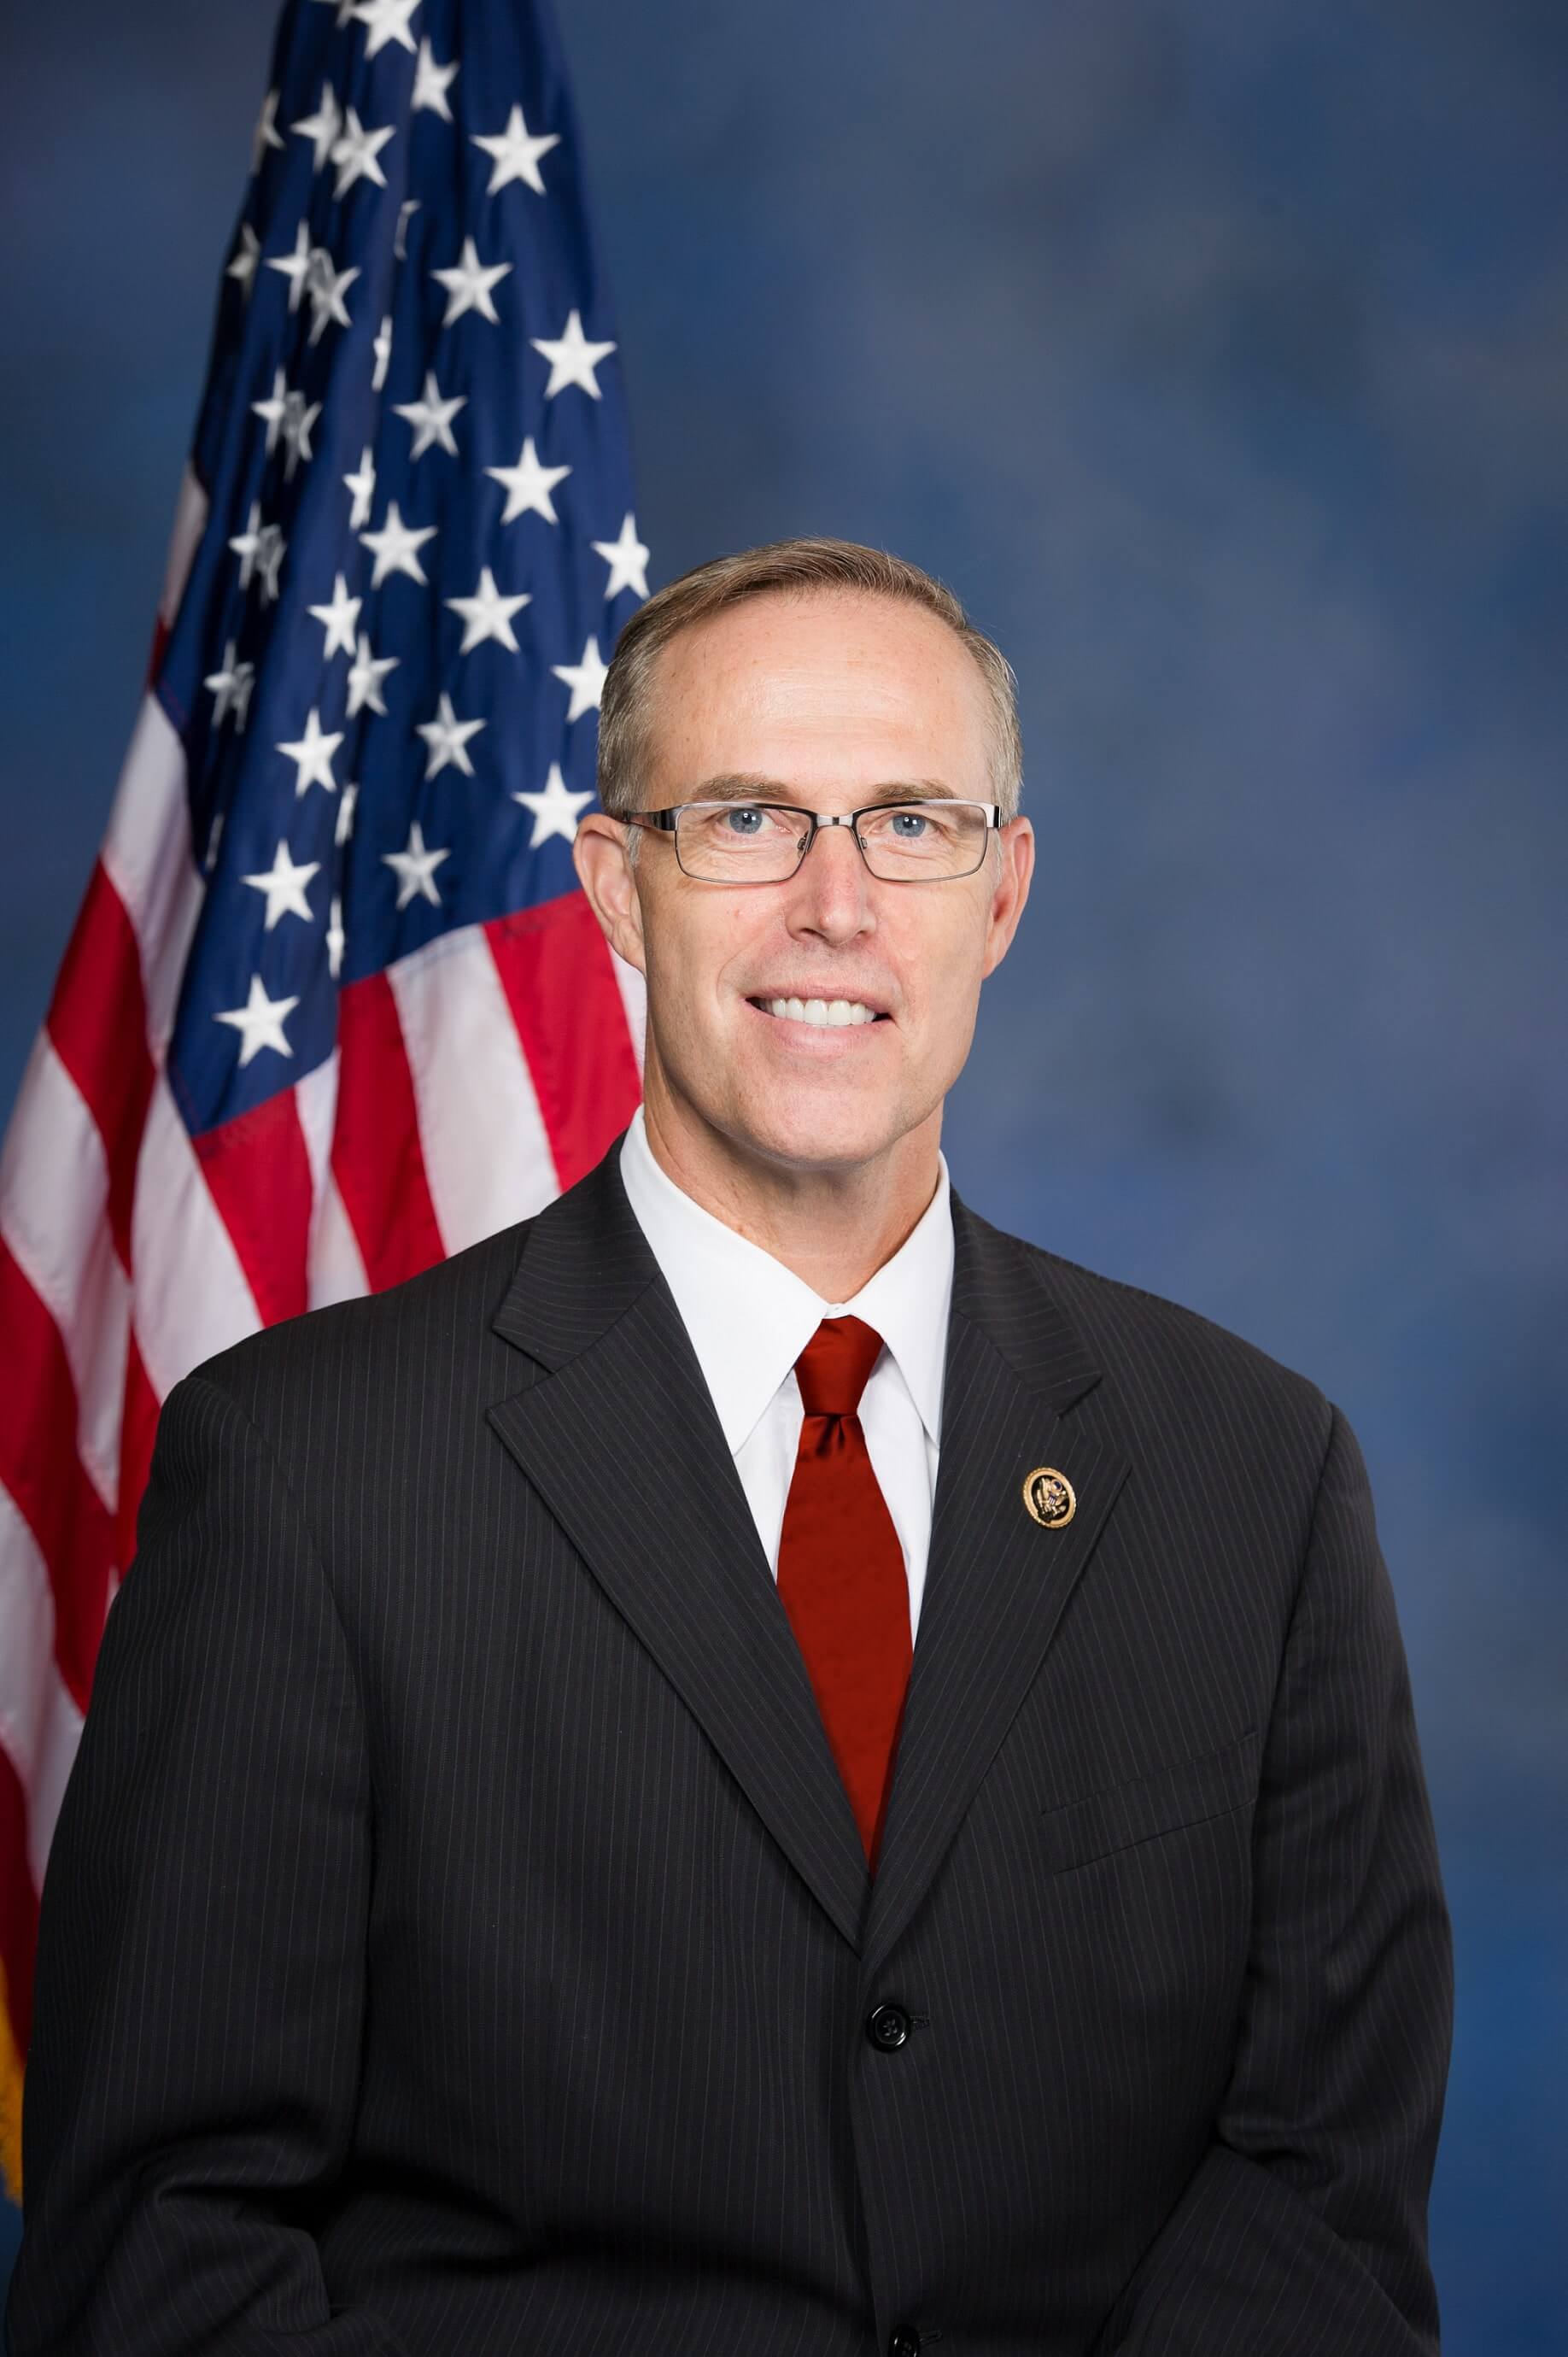 Senator Jared Huffman